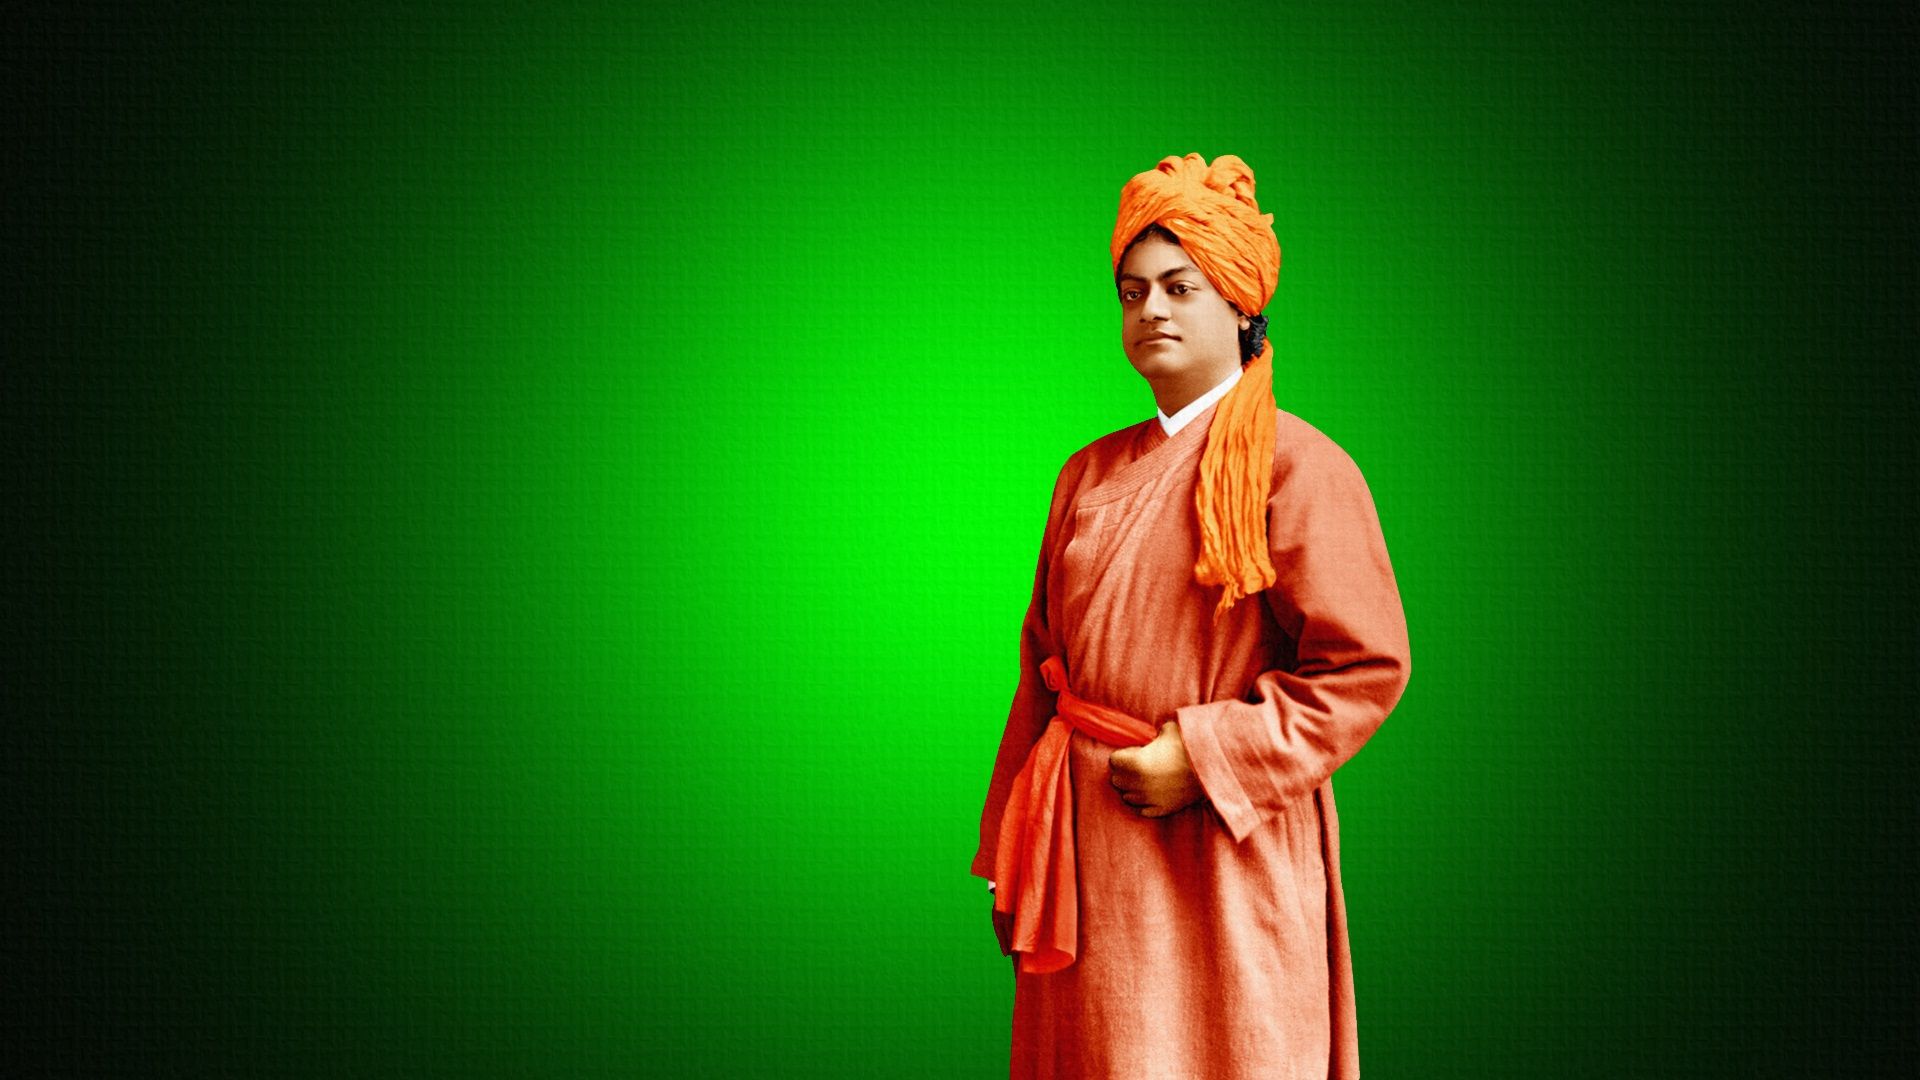 Pin on Download Swami Vivekananda Images Photos Wallpapers Full HD. 58